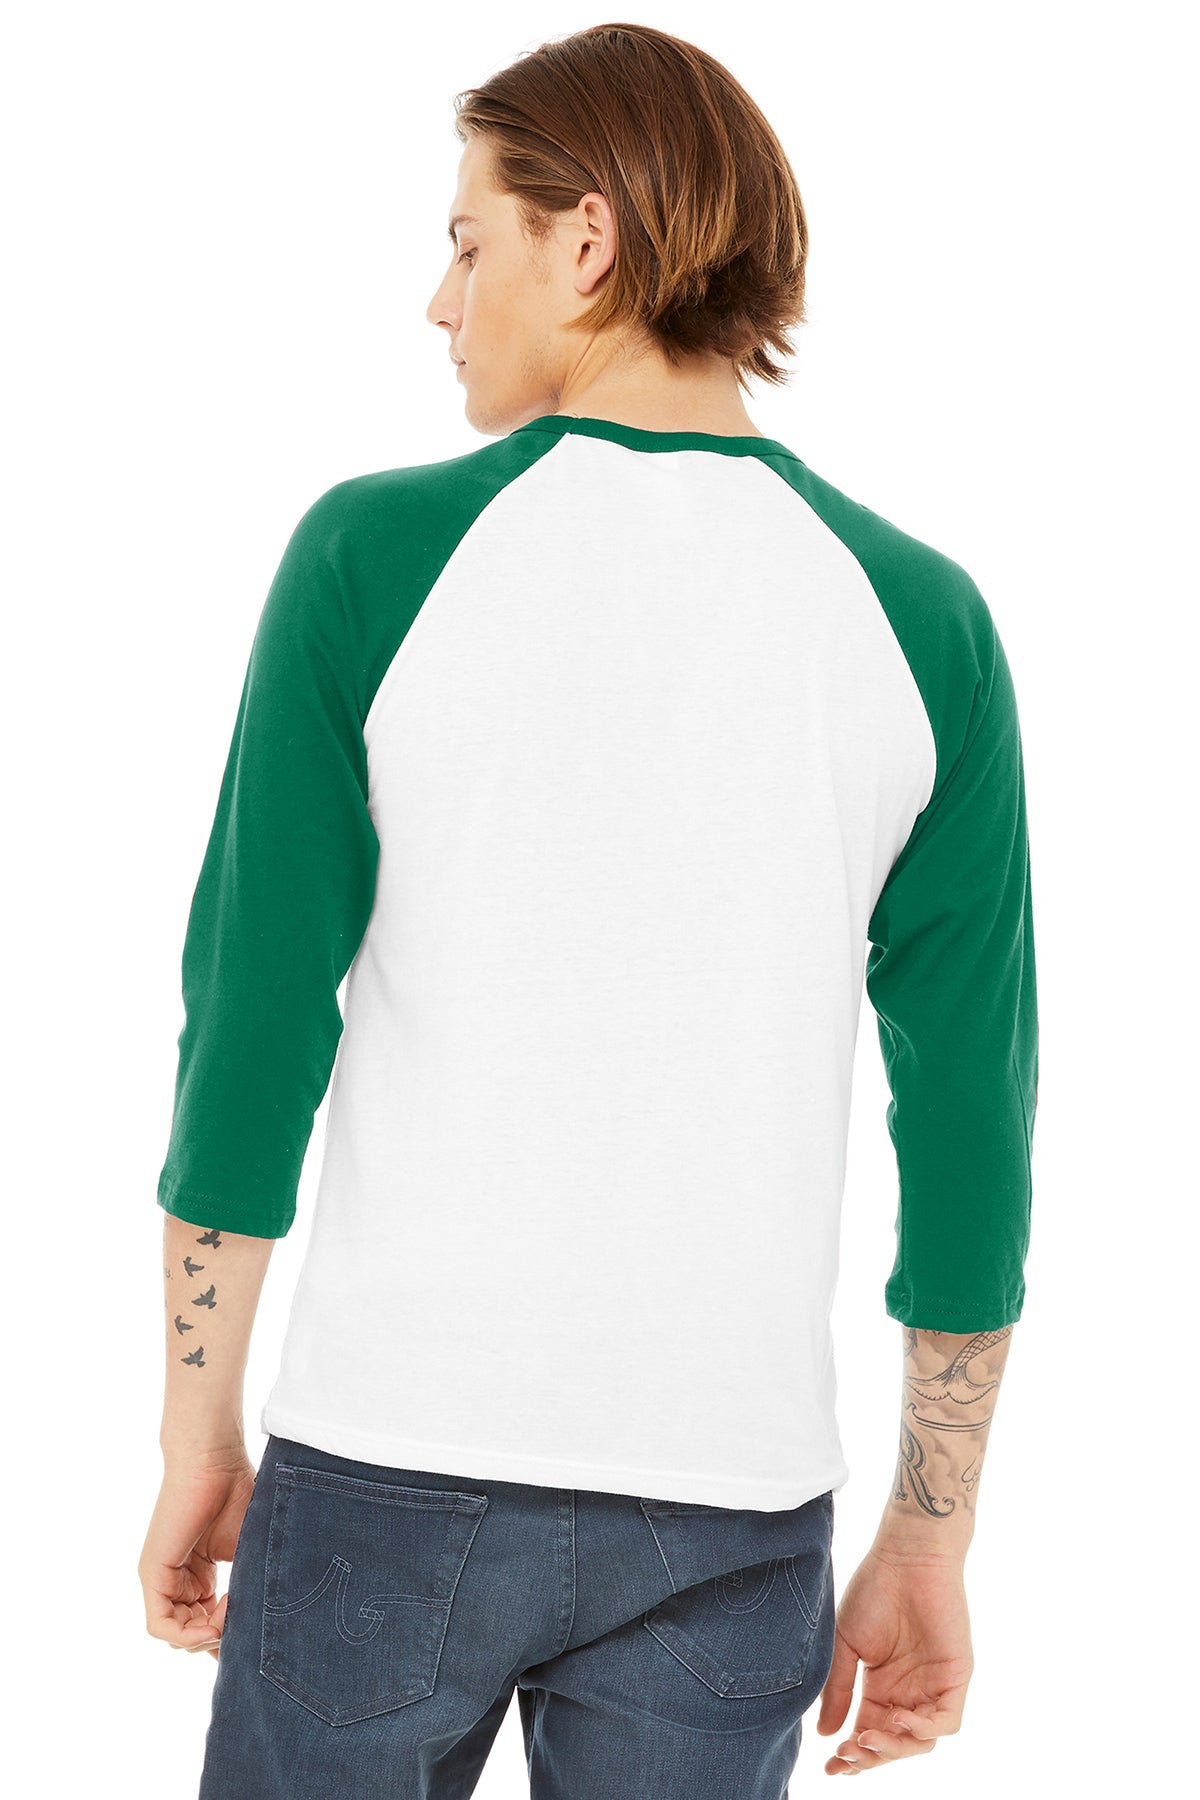 bella + canvas unisex 3/4-sleeve baseball t-shirt 3200 white/ kelly